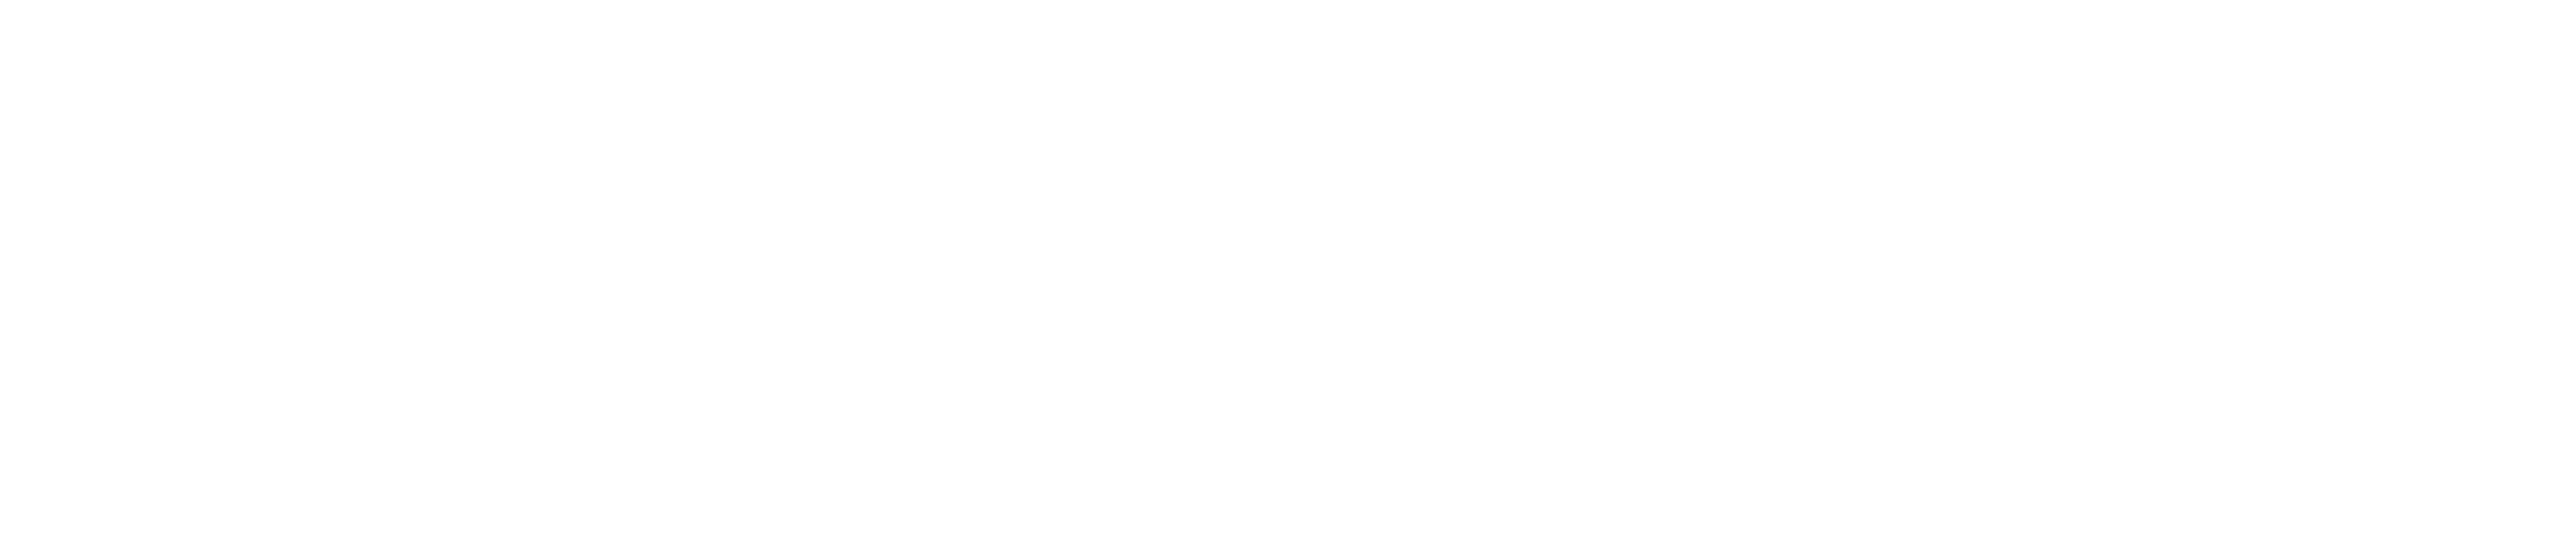 Wiggins Building Solutions